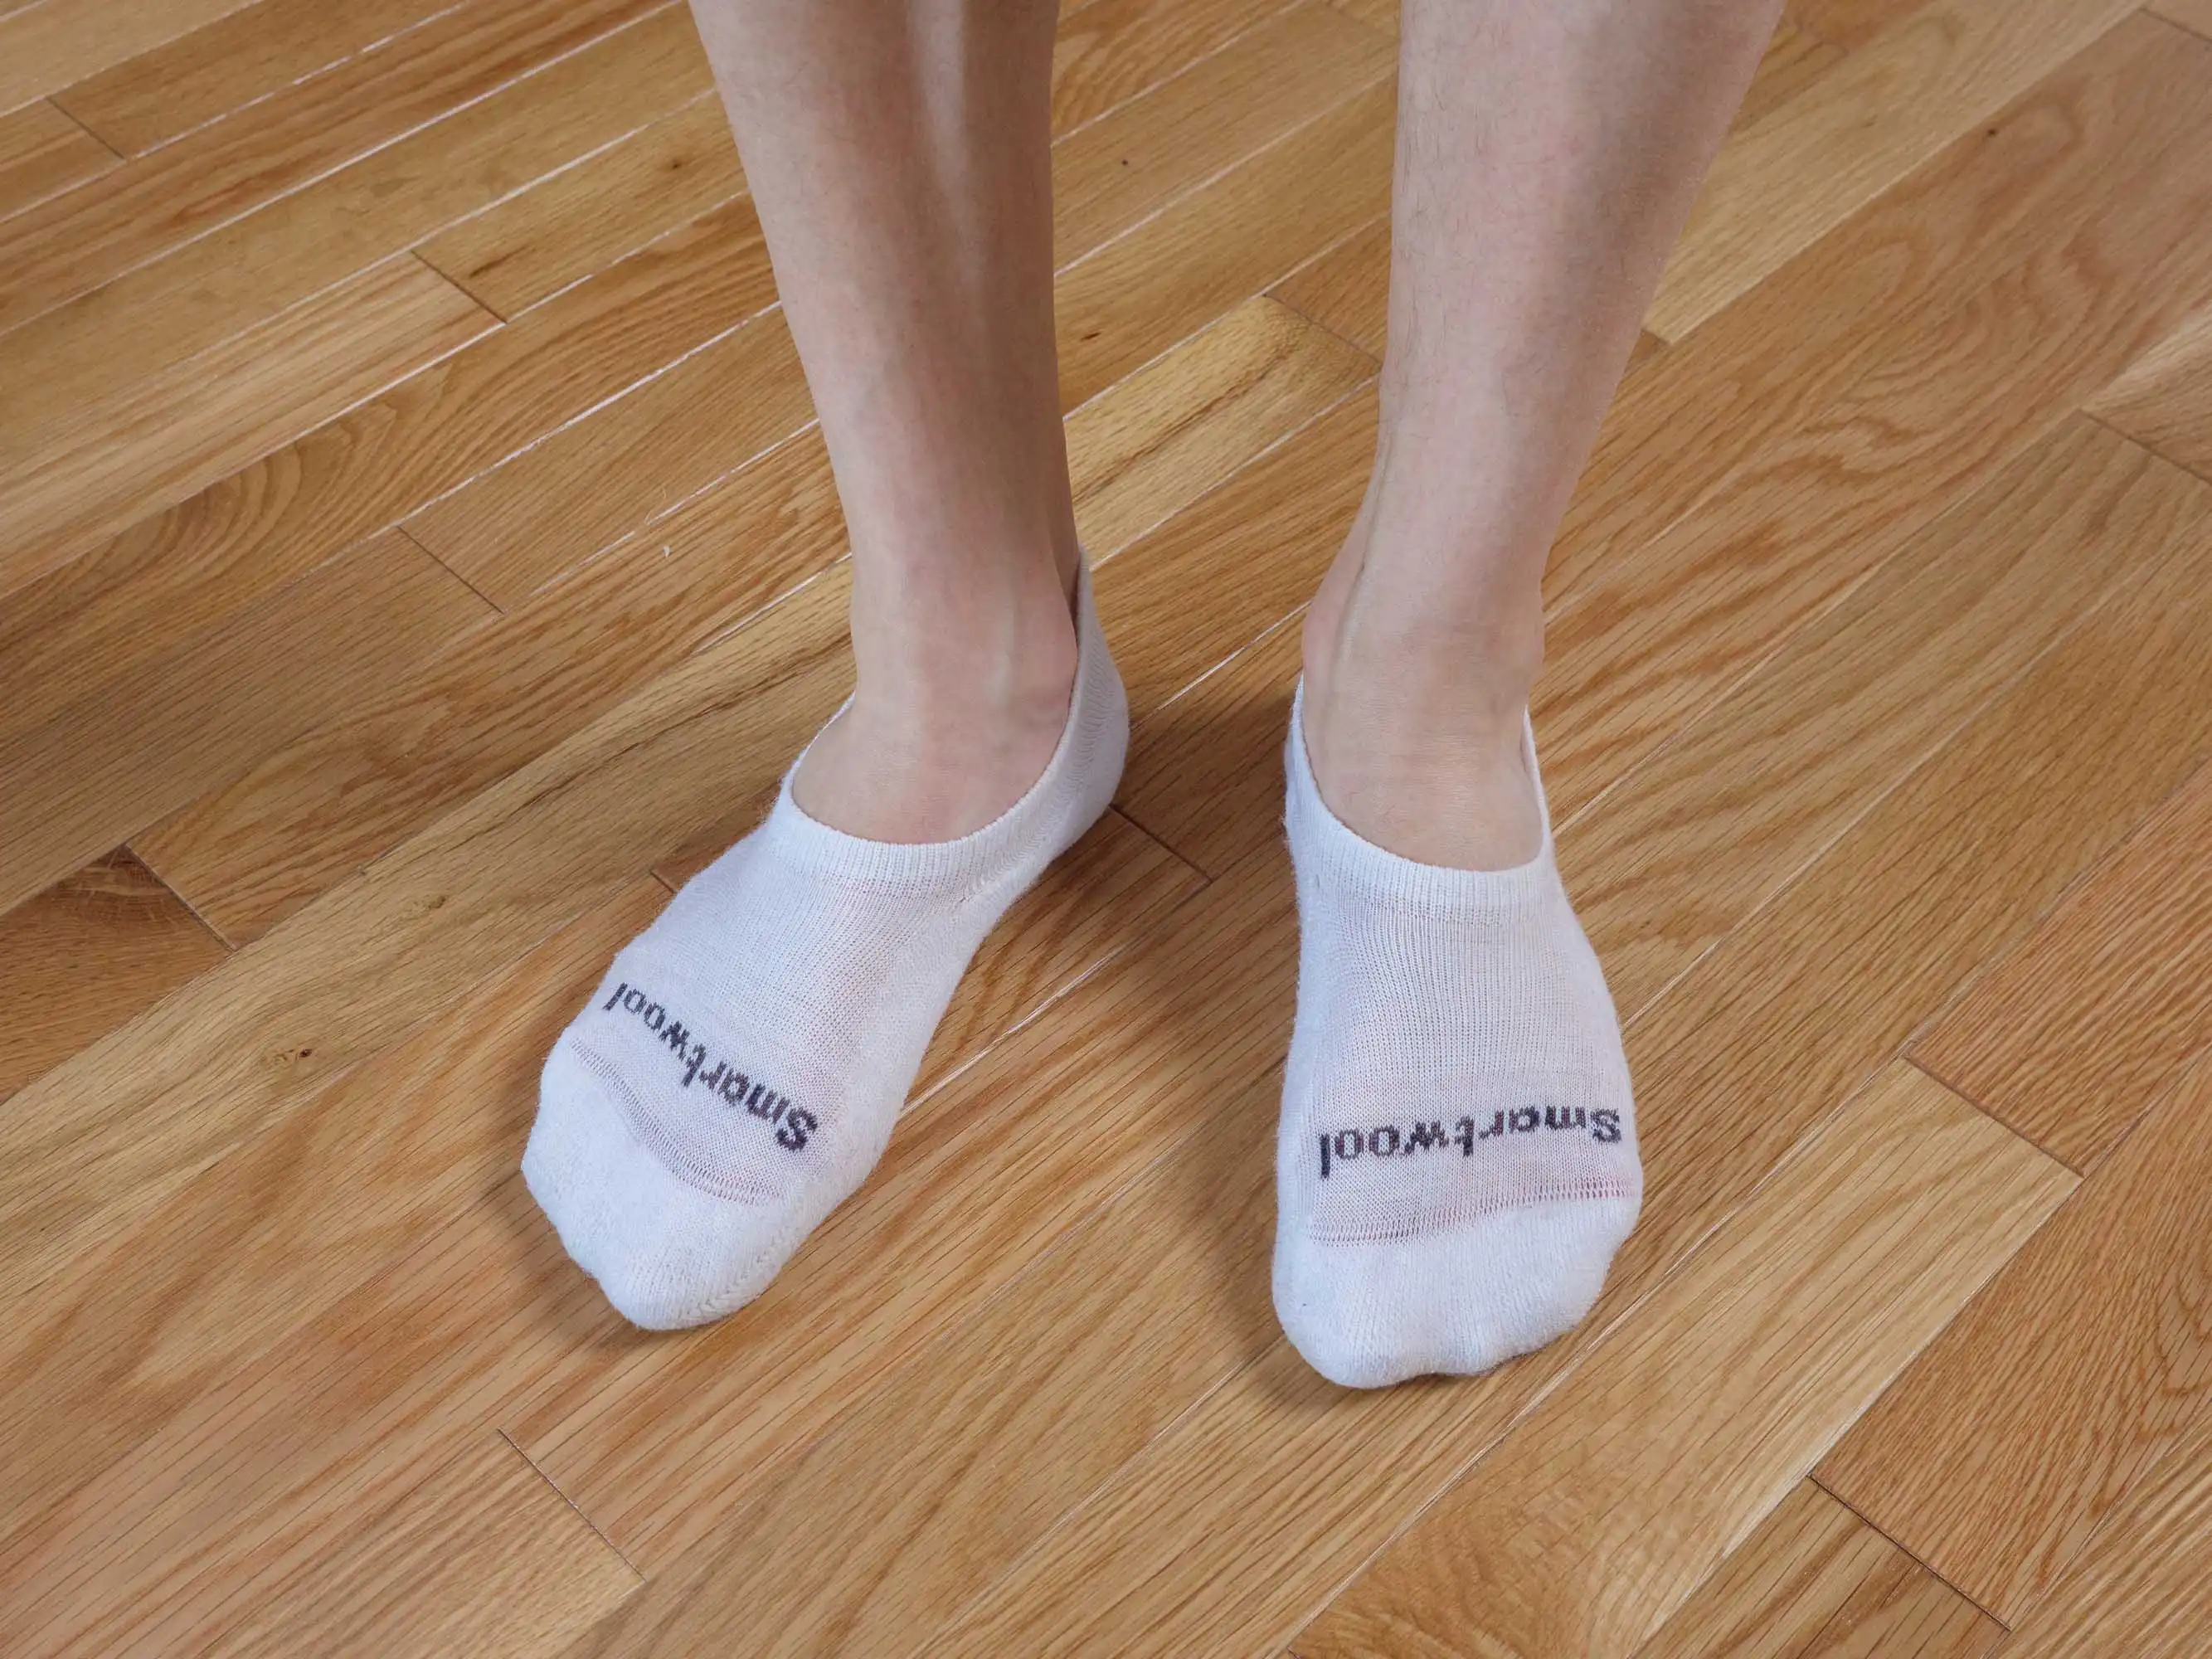 Loafer Sneakers Low Cut Cotton Socks With Non Slip Grips Jormatt Genuine Mens No Show Socks 